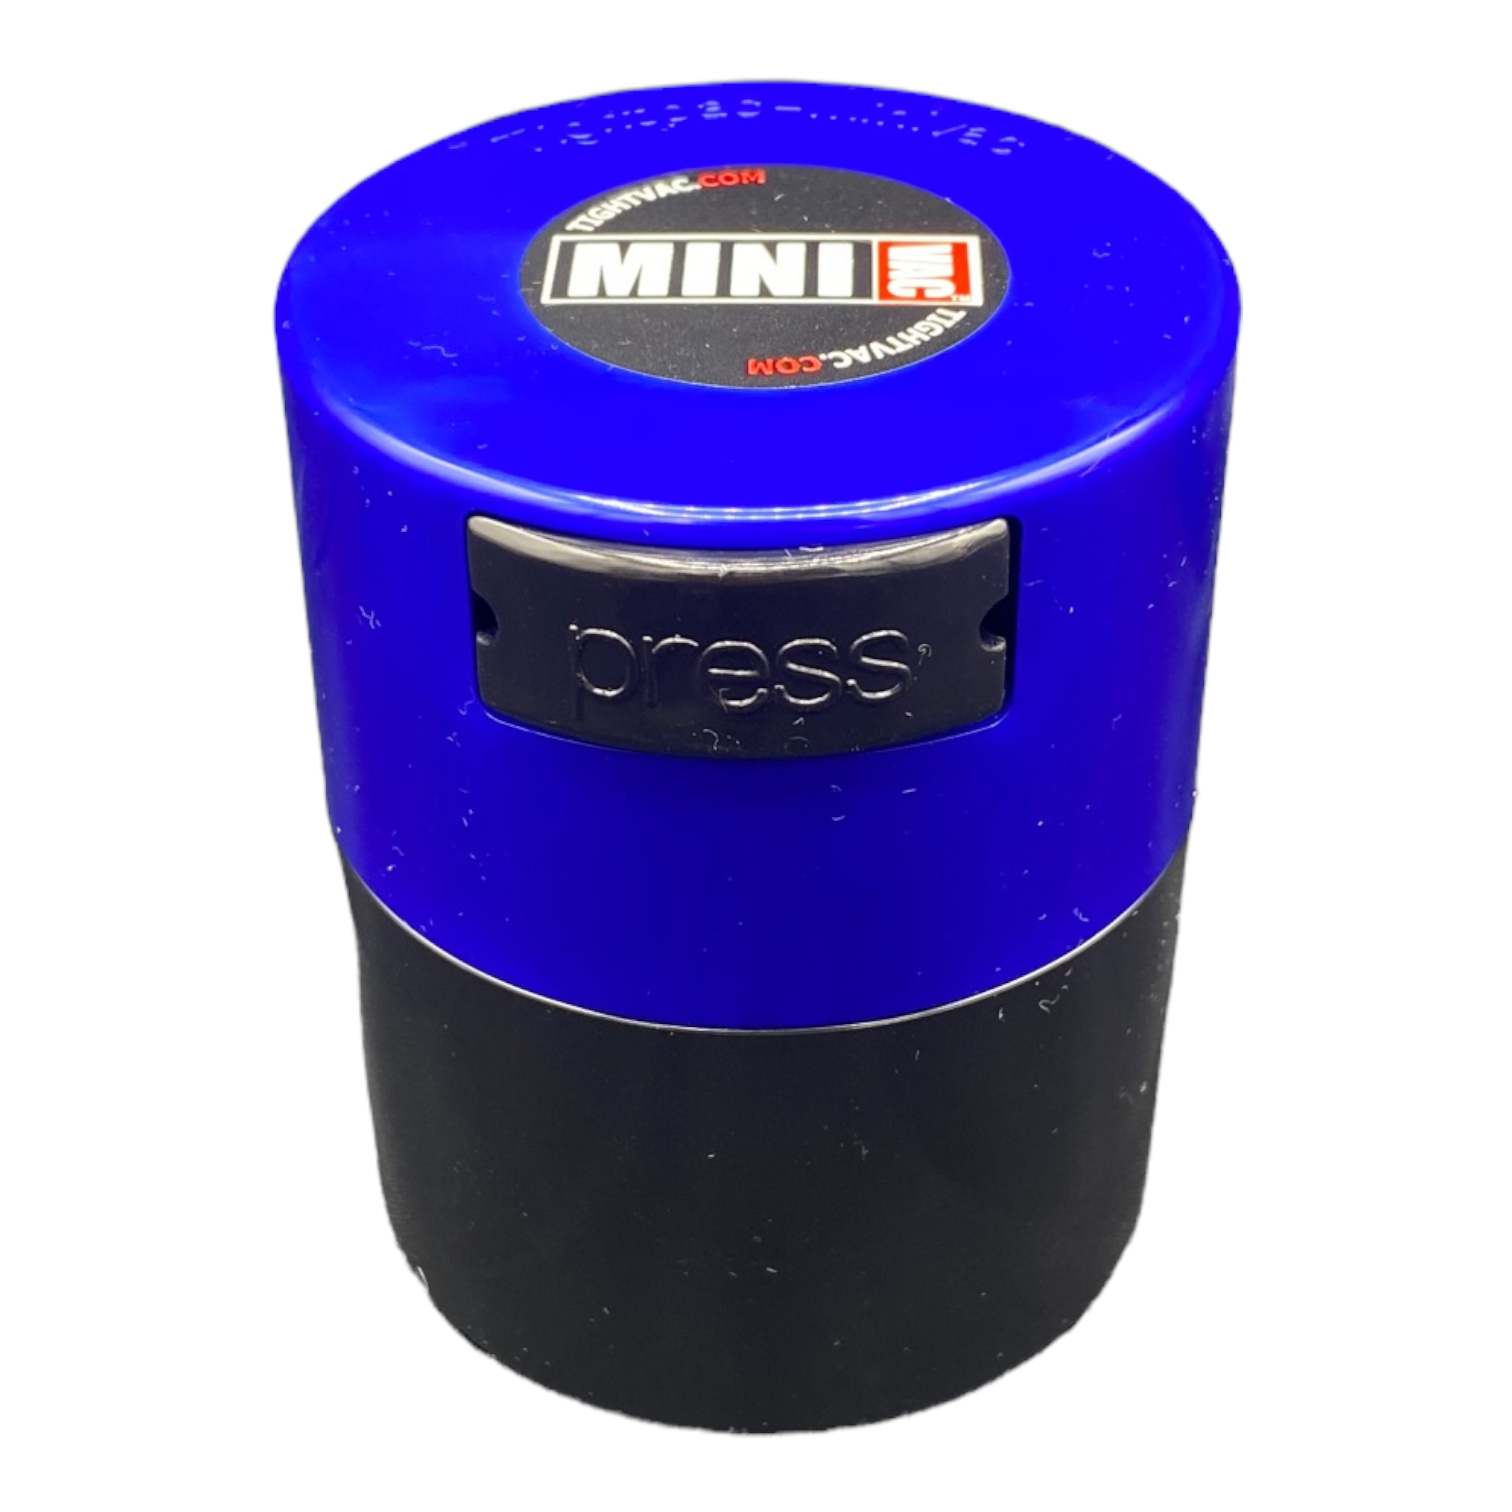 Tight Vac - Minivac Vacuum Small Container